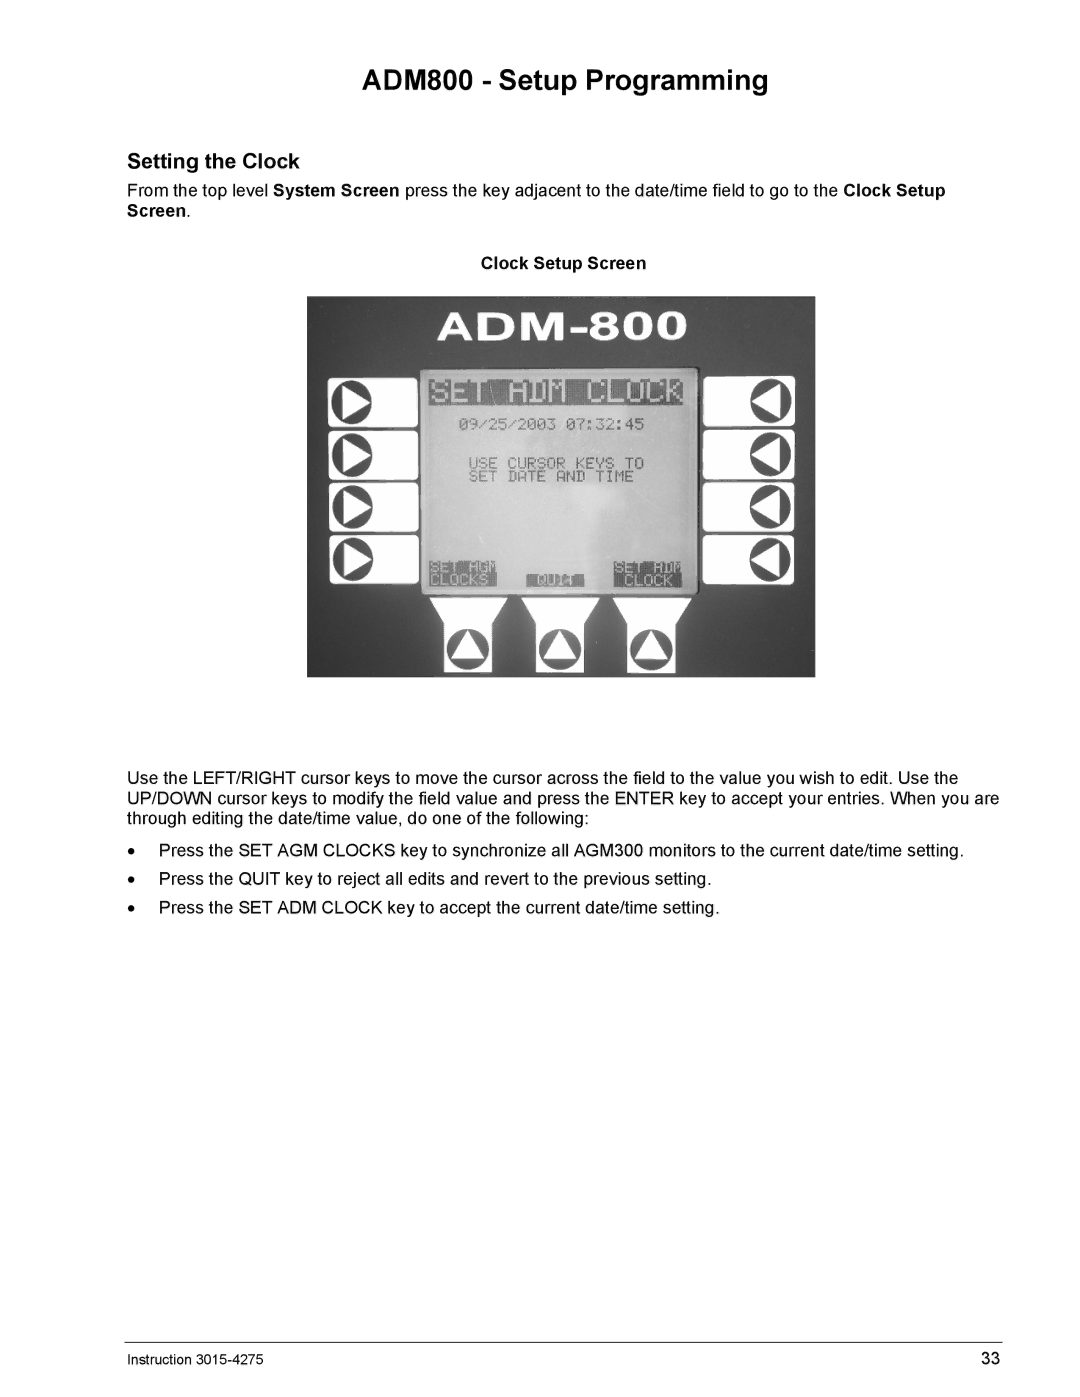 Bacharach AGM300 manual ADM800 Setup Programming, Setting the Clock, Clock Setup Screen 